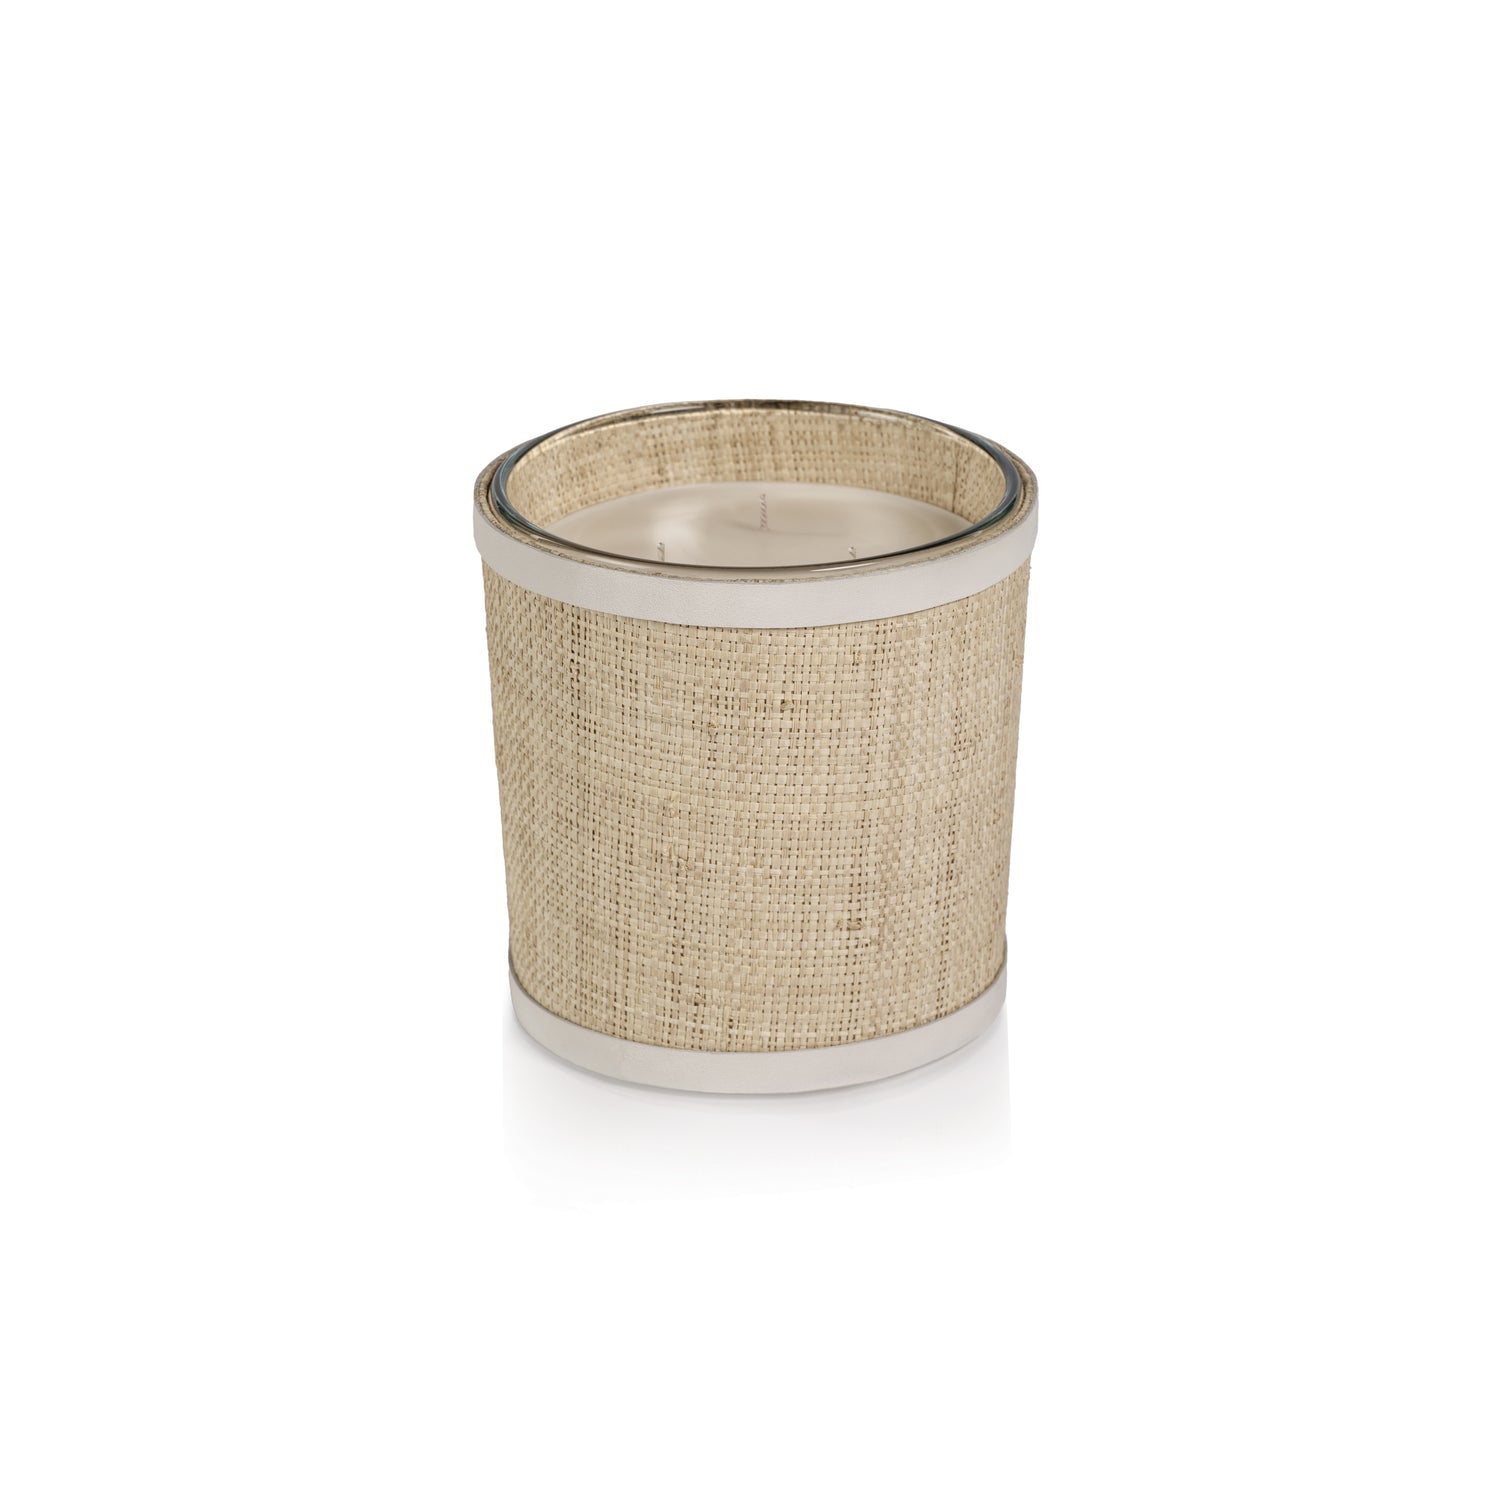 Candle in Natural Raffia Basket w/ Leather Trim - White